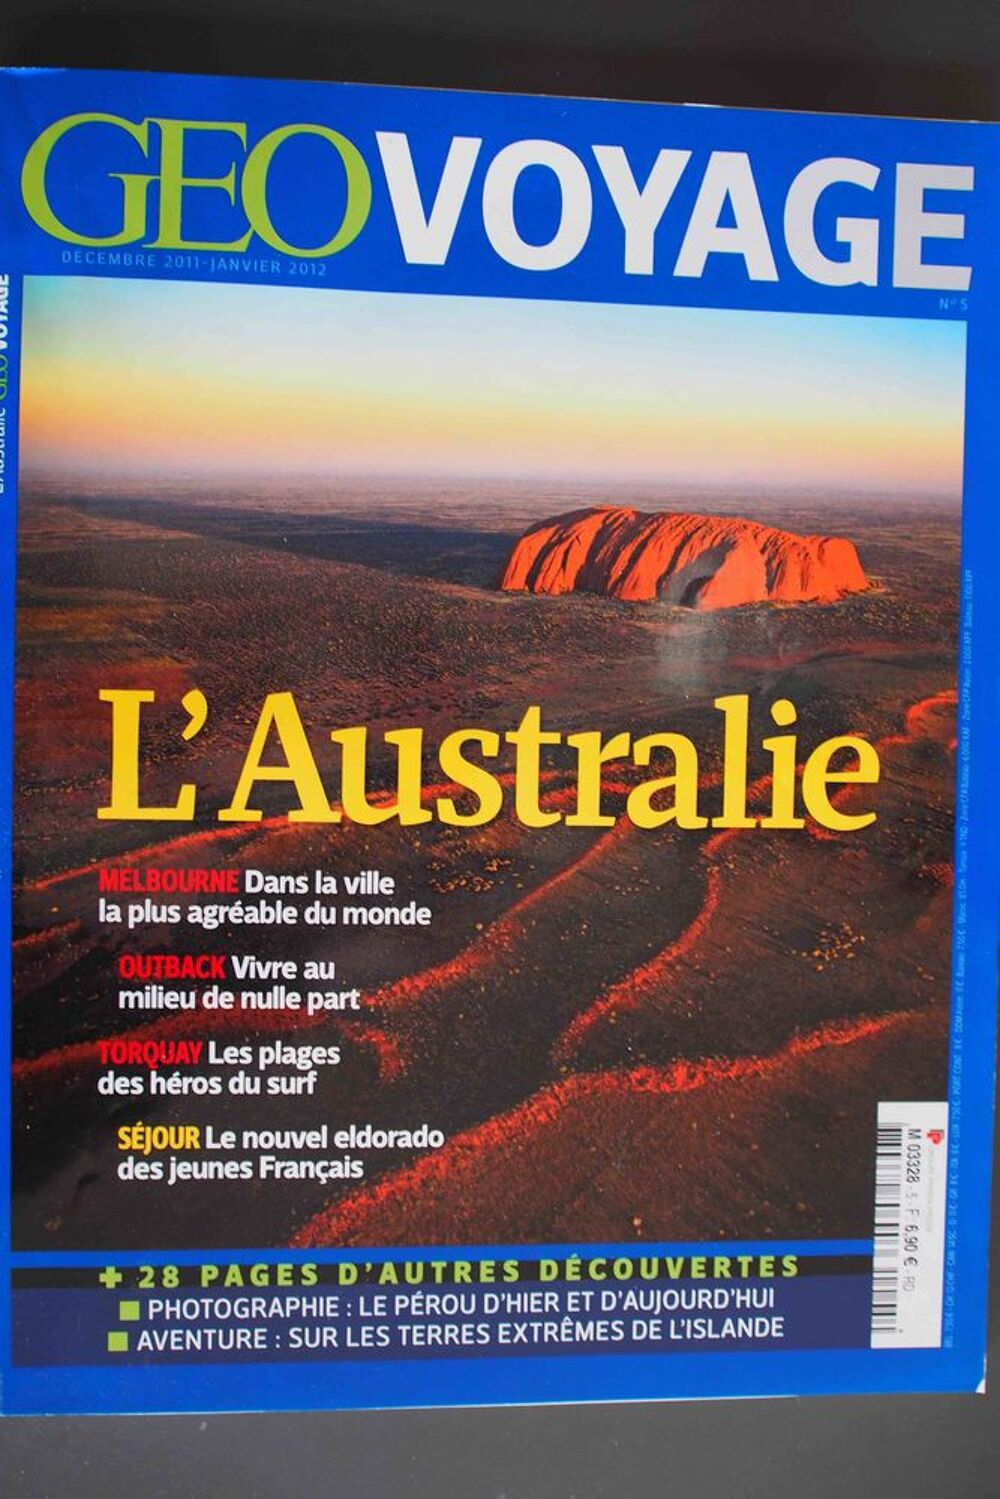 L'Australie - Geovoyage, Livres et BD